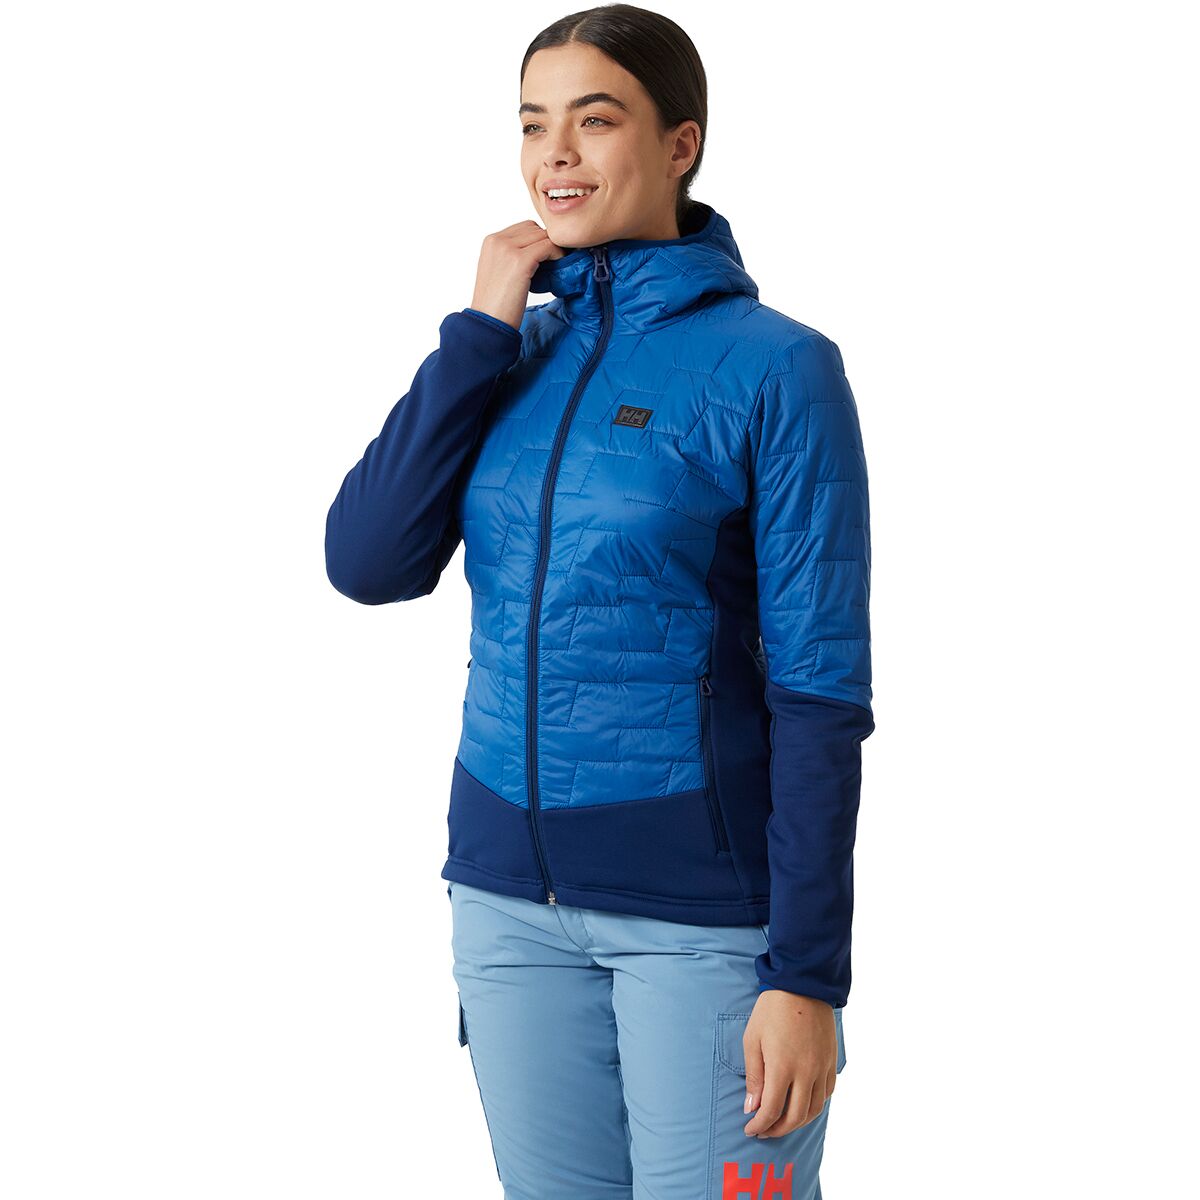 Helly Hansen LifaLoft Hybrid Insulator Jacket - Women's